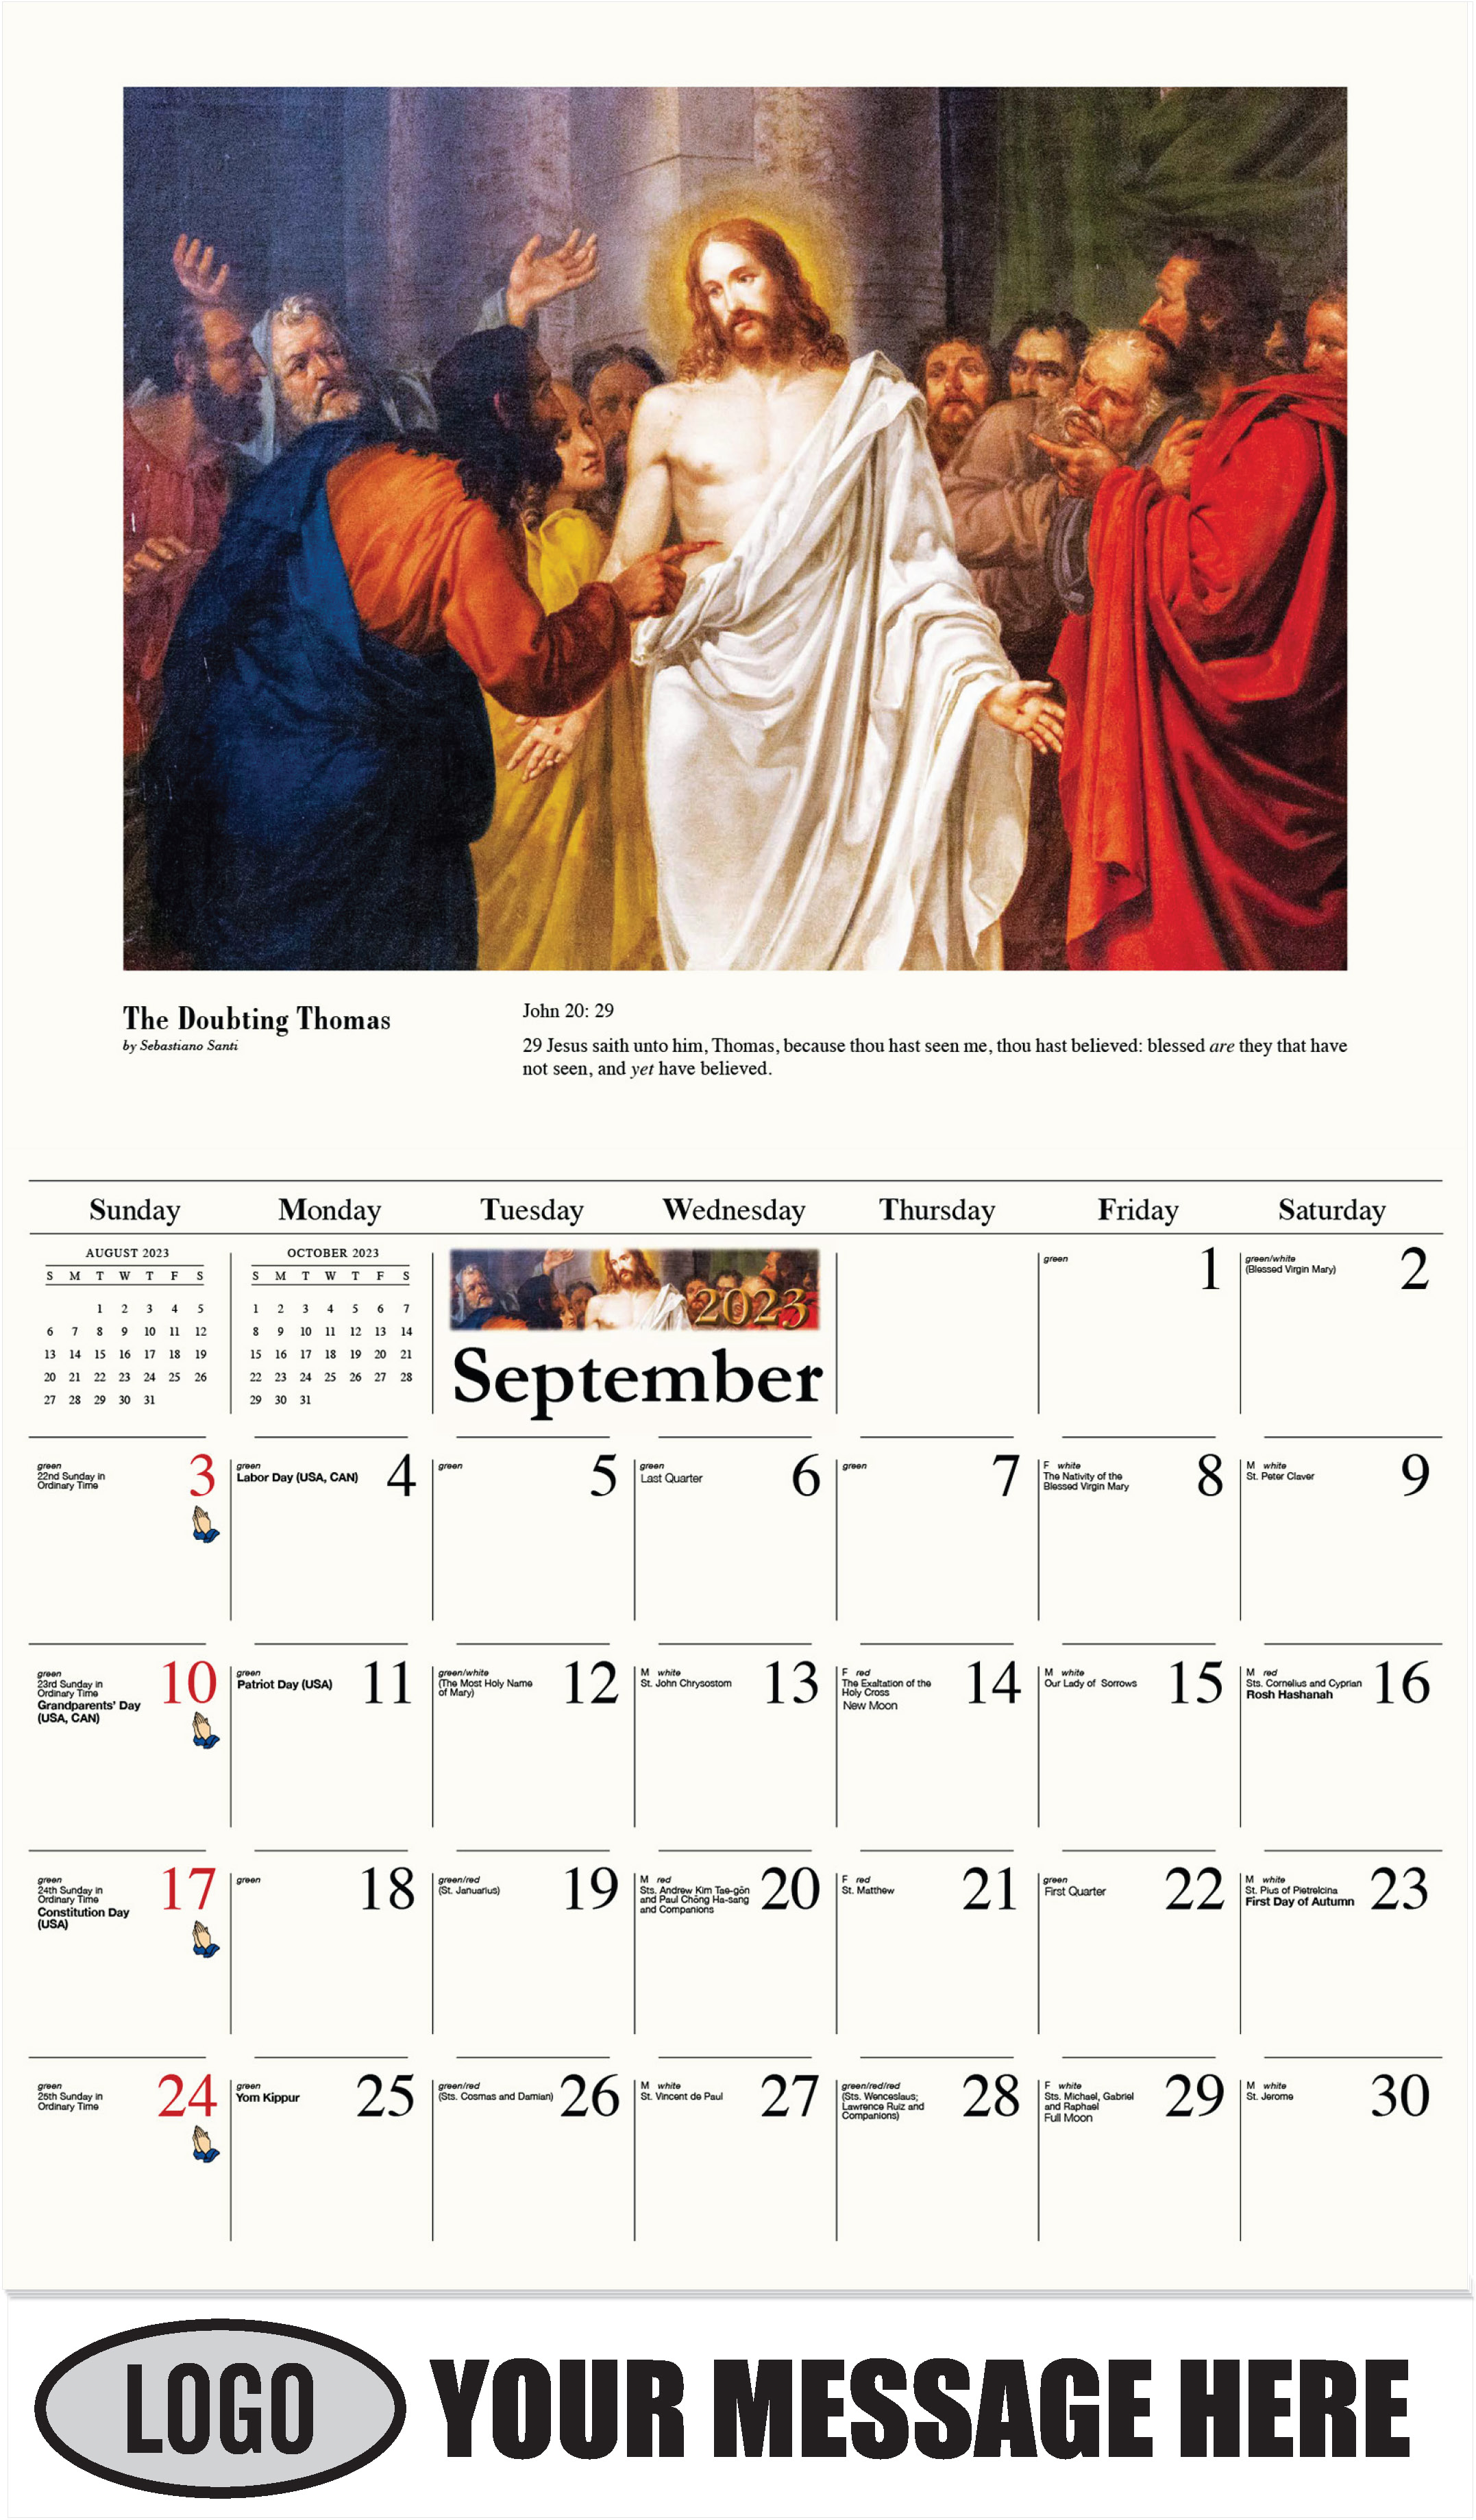 September - Catholic Inspiration 2023 Promotional Calendar